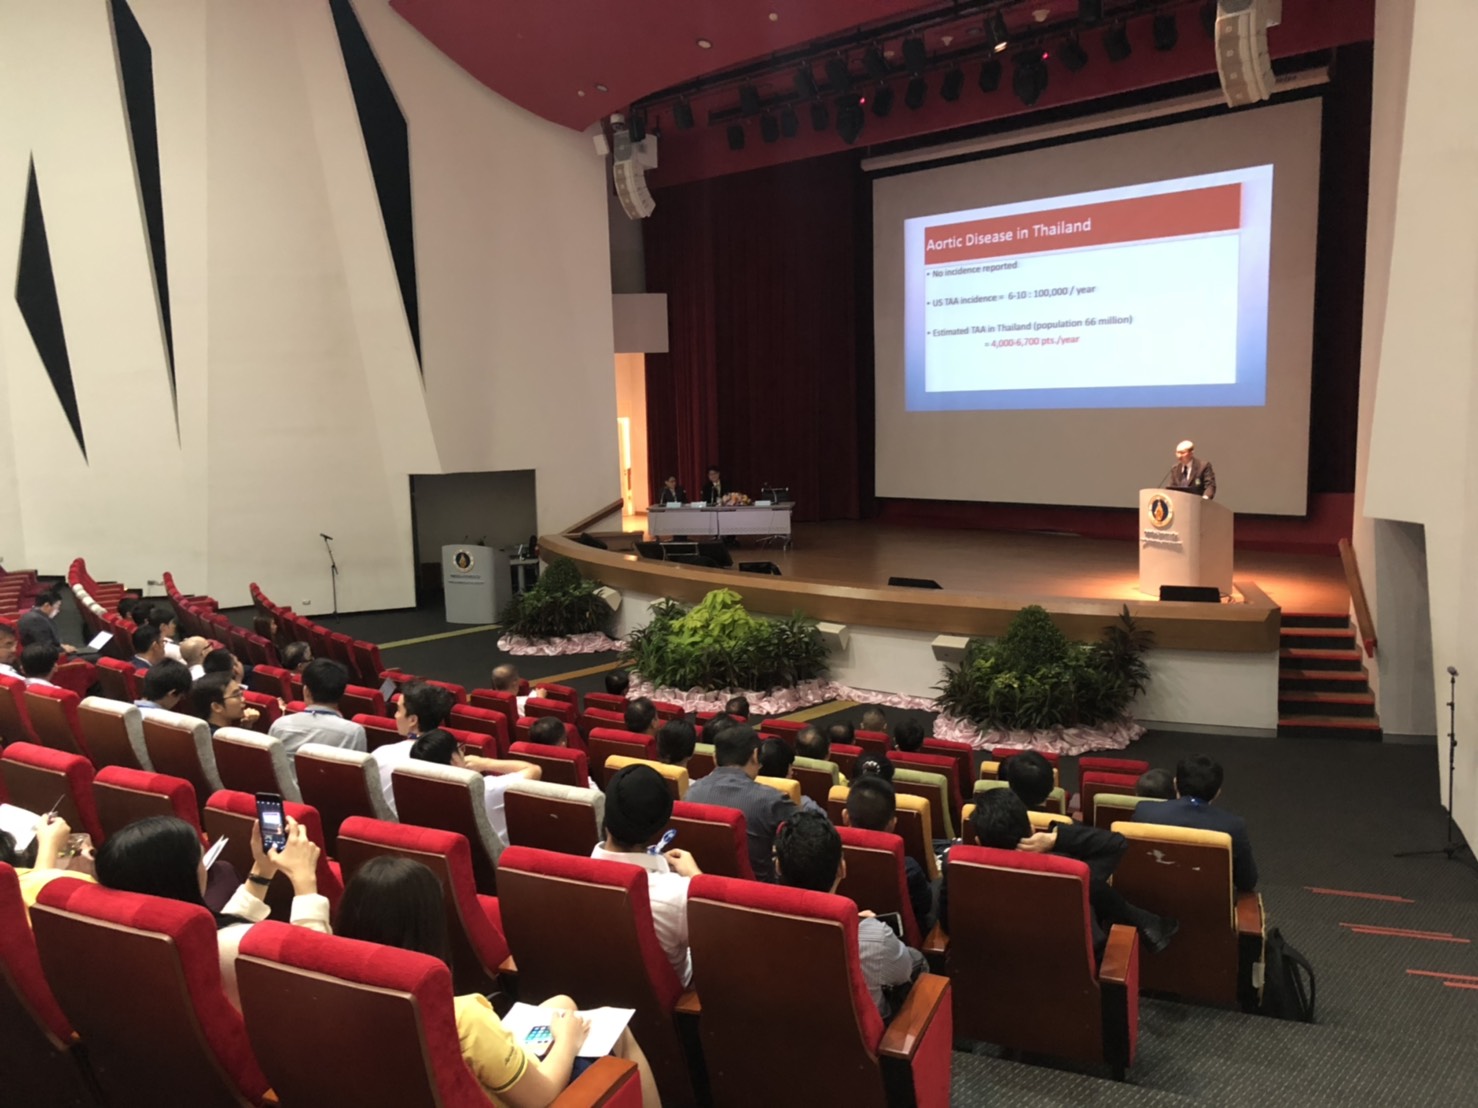 The 1st Siriraj Aortic Symposium 2019